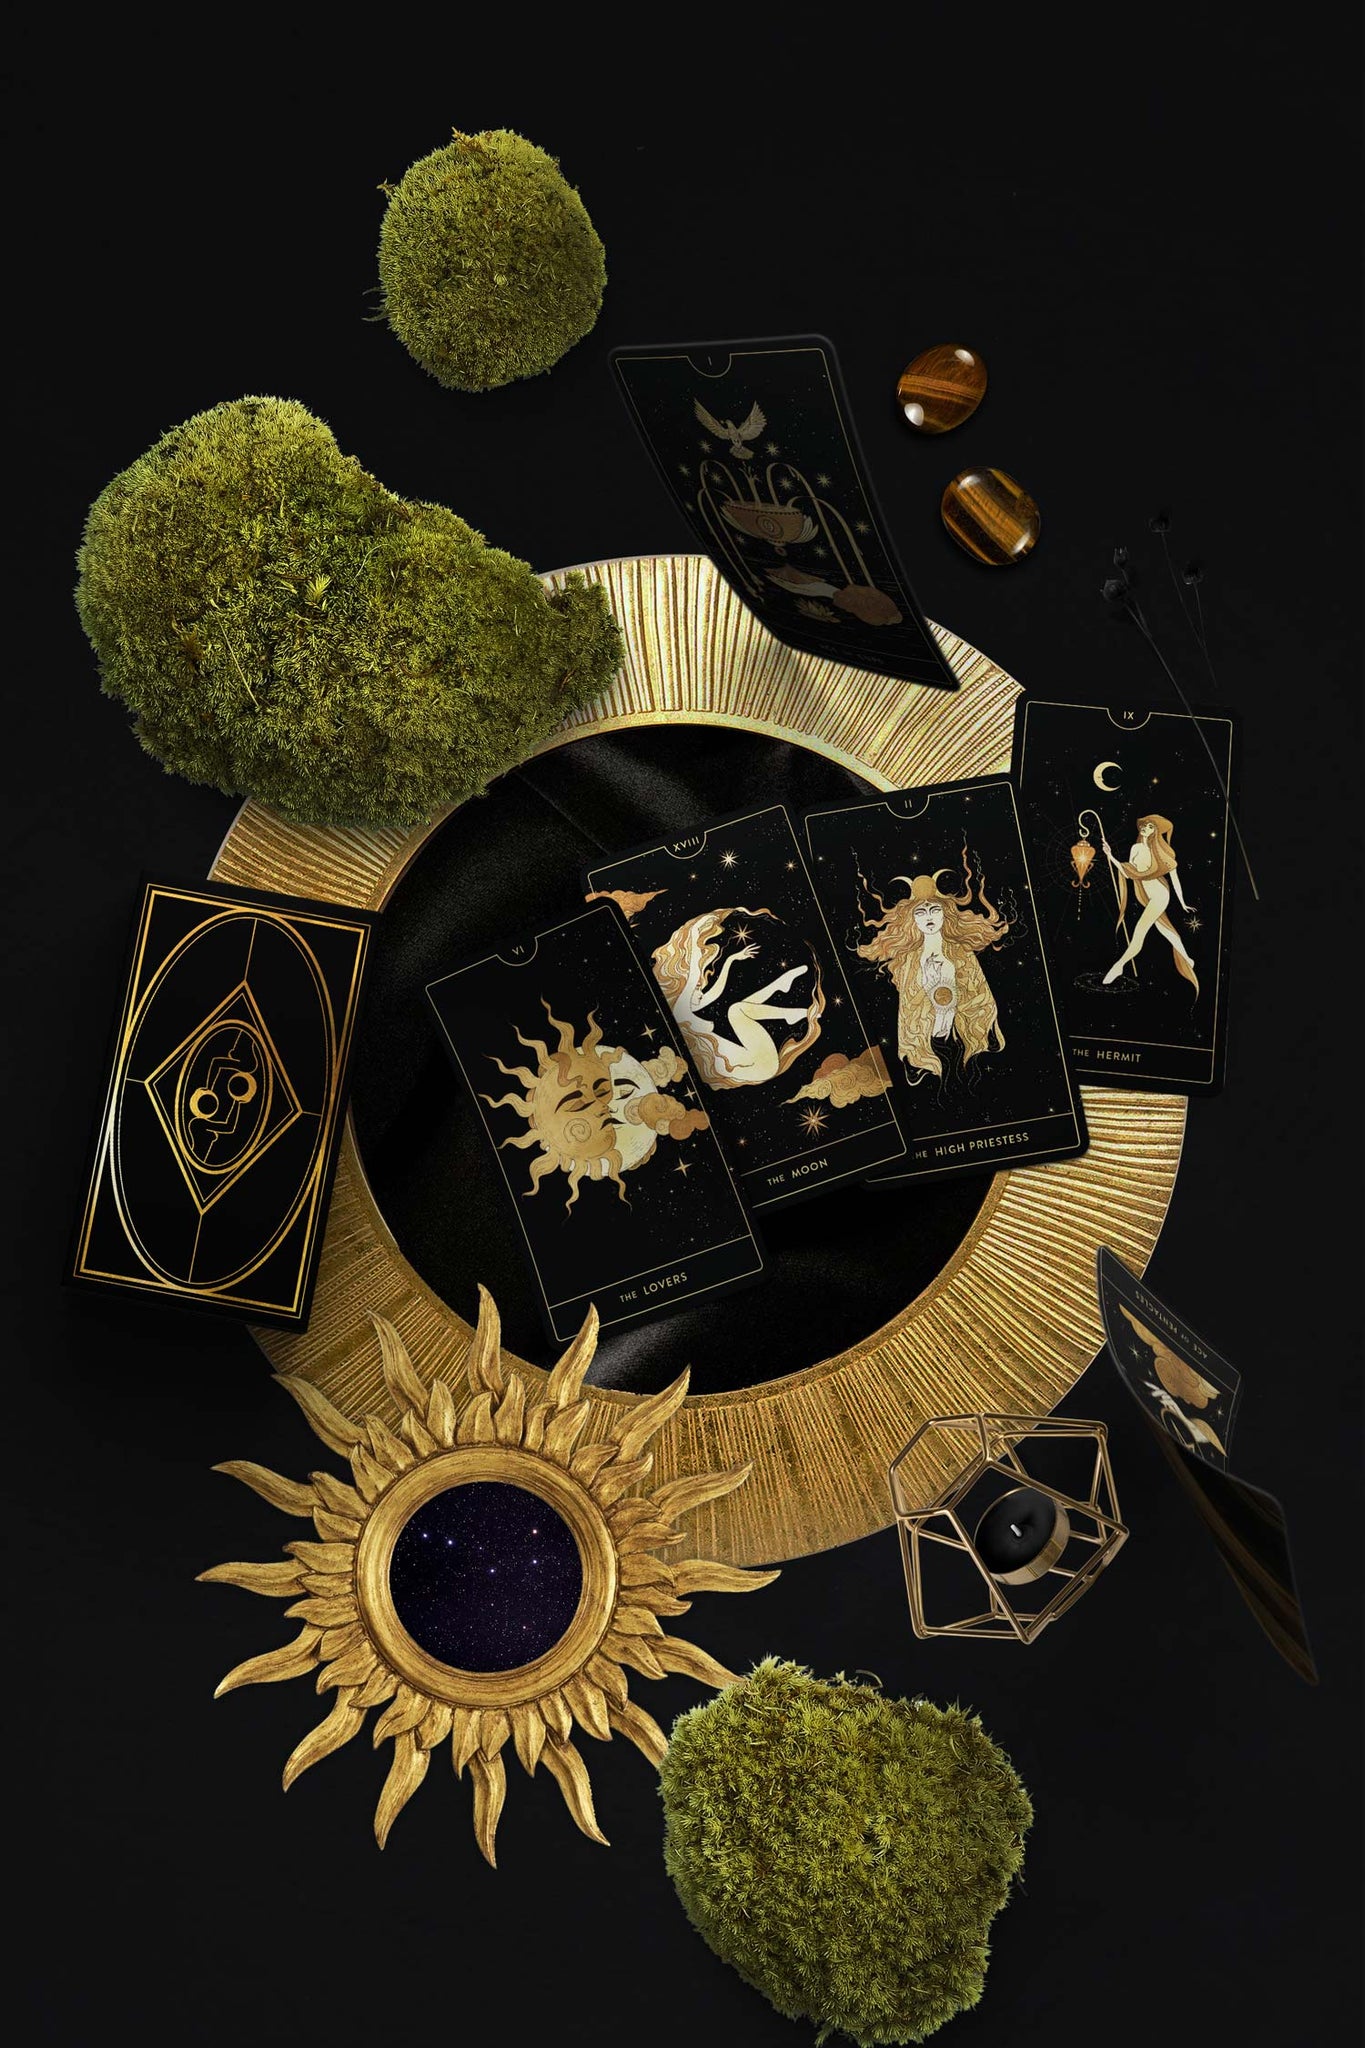 Divine Feminine Tarot Deck by Cocorrina & Co Shop featuring gold foil.